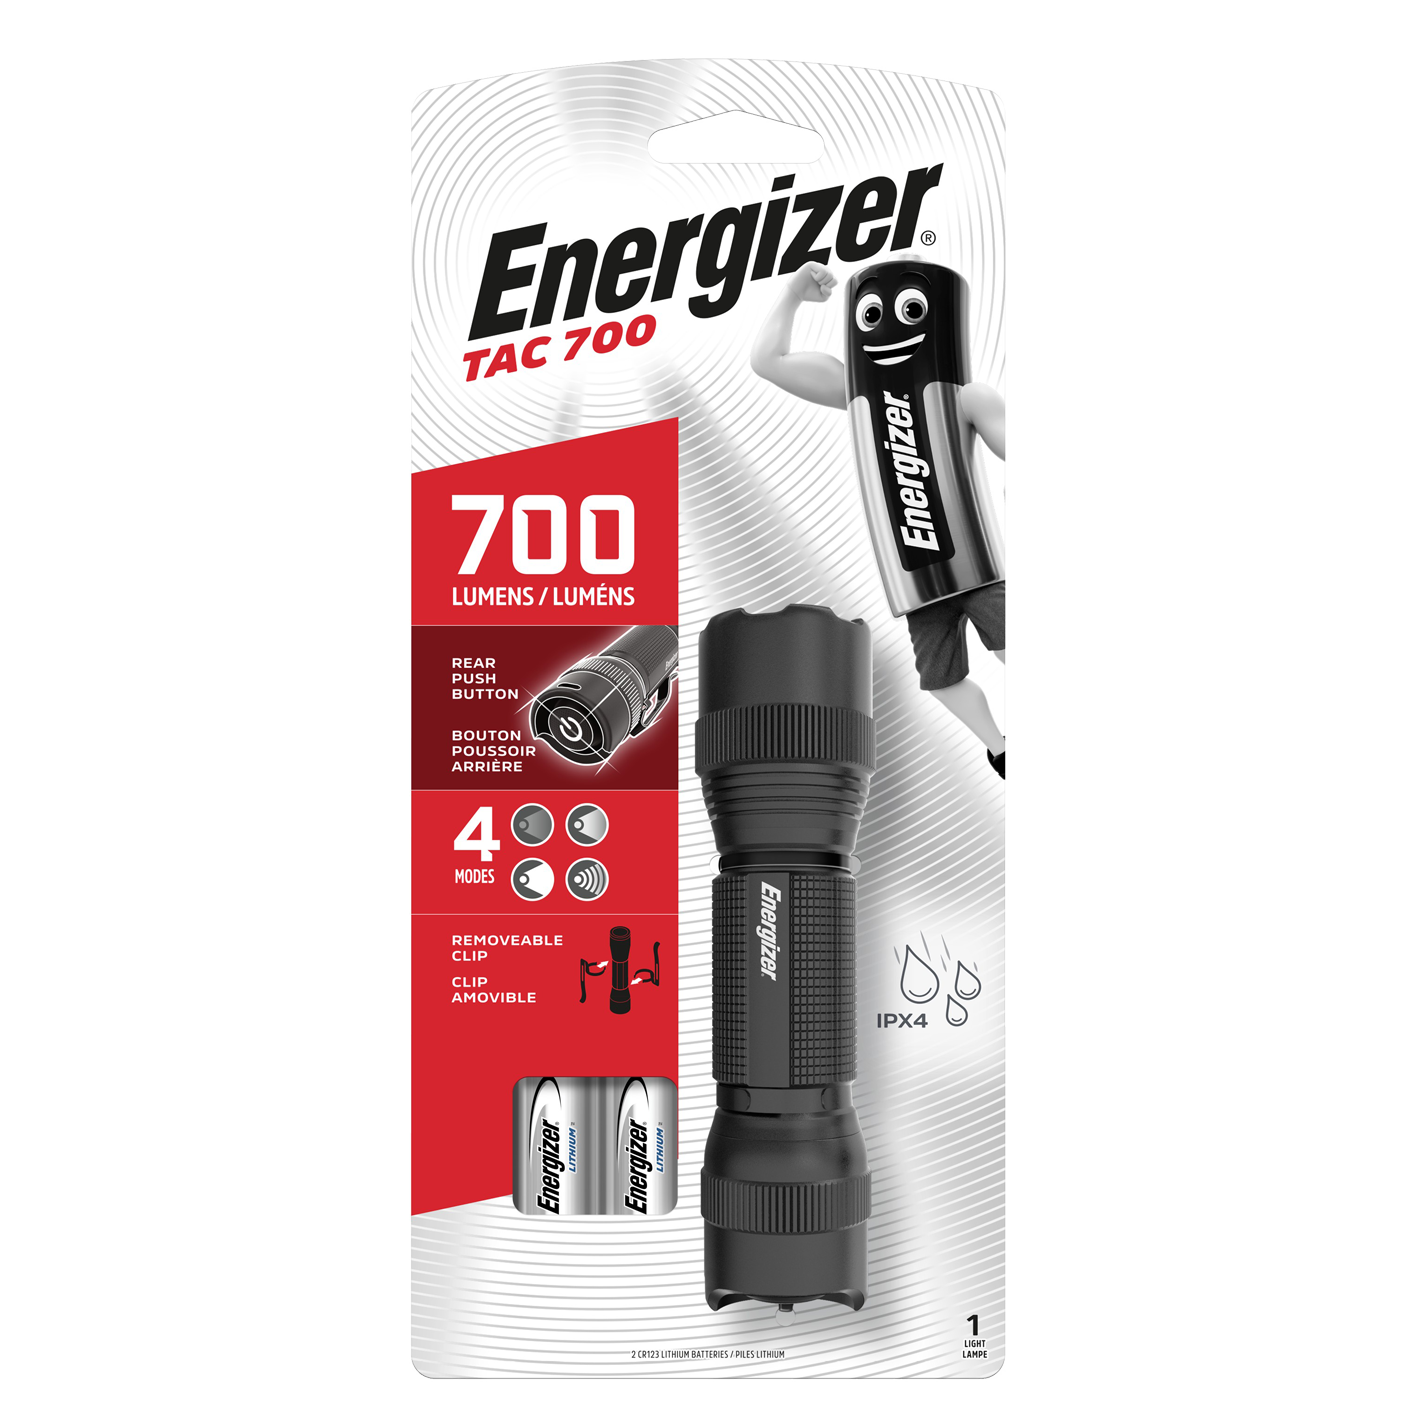 Energizer TAC700 Langlebige professionelle Taschenlampe mit 2 x CR123-Batterien